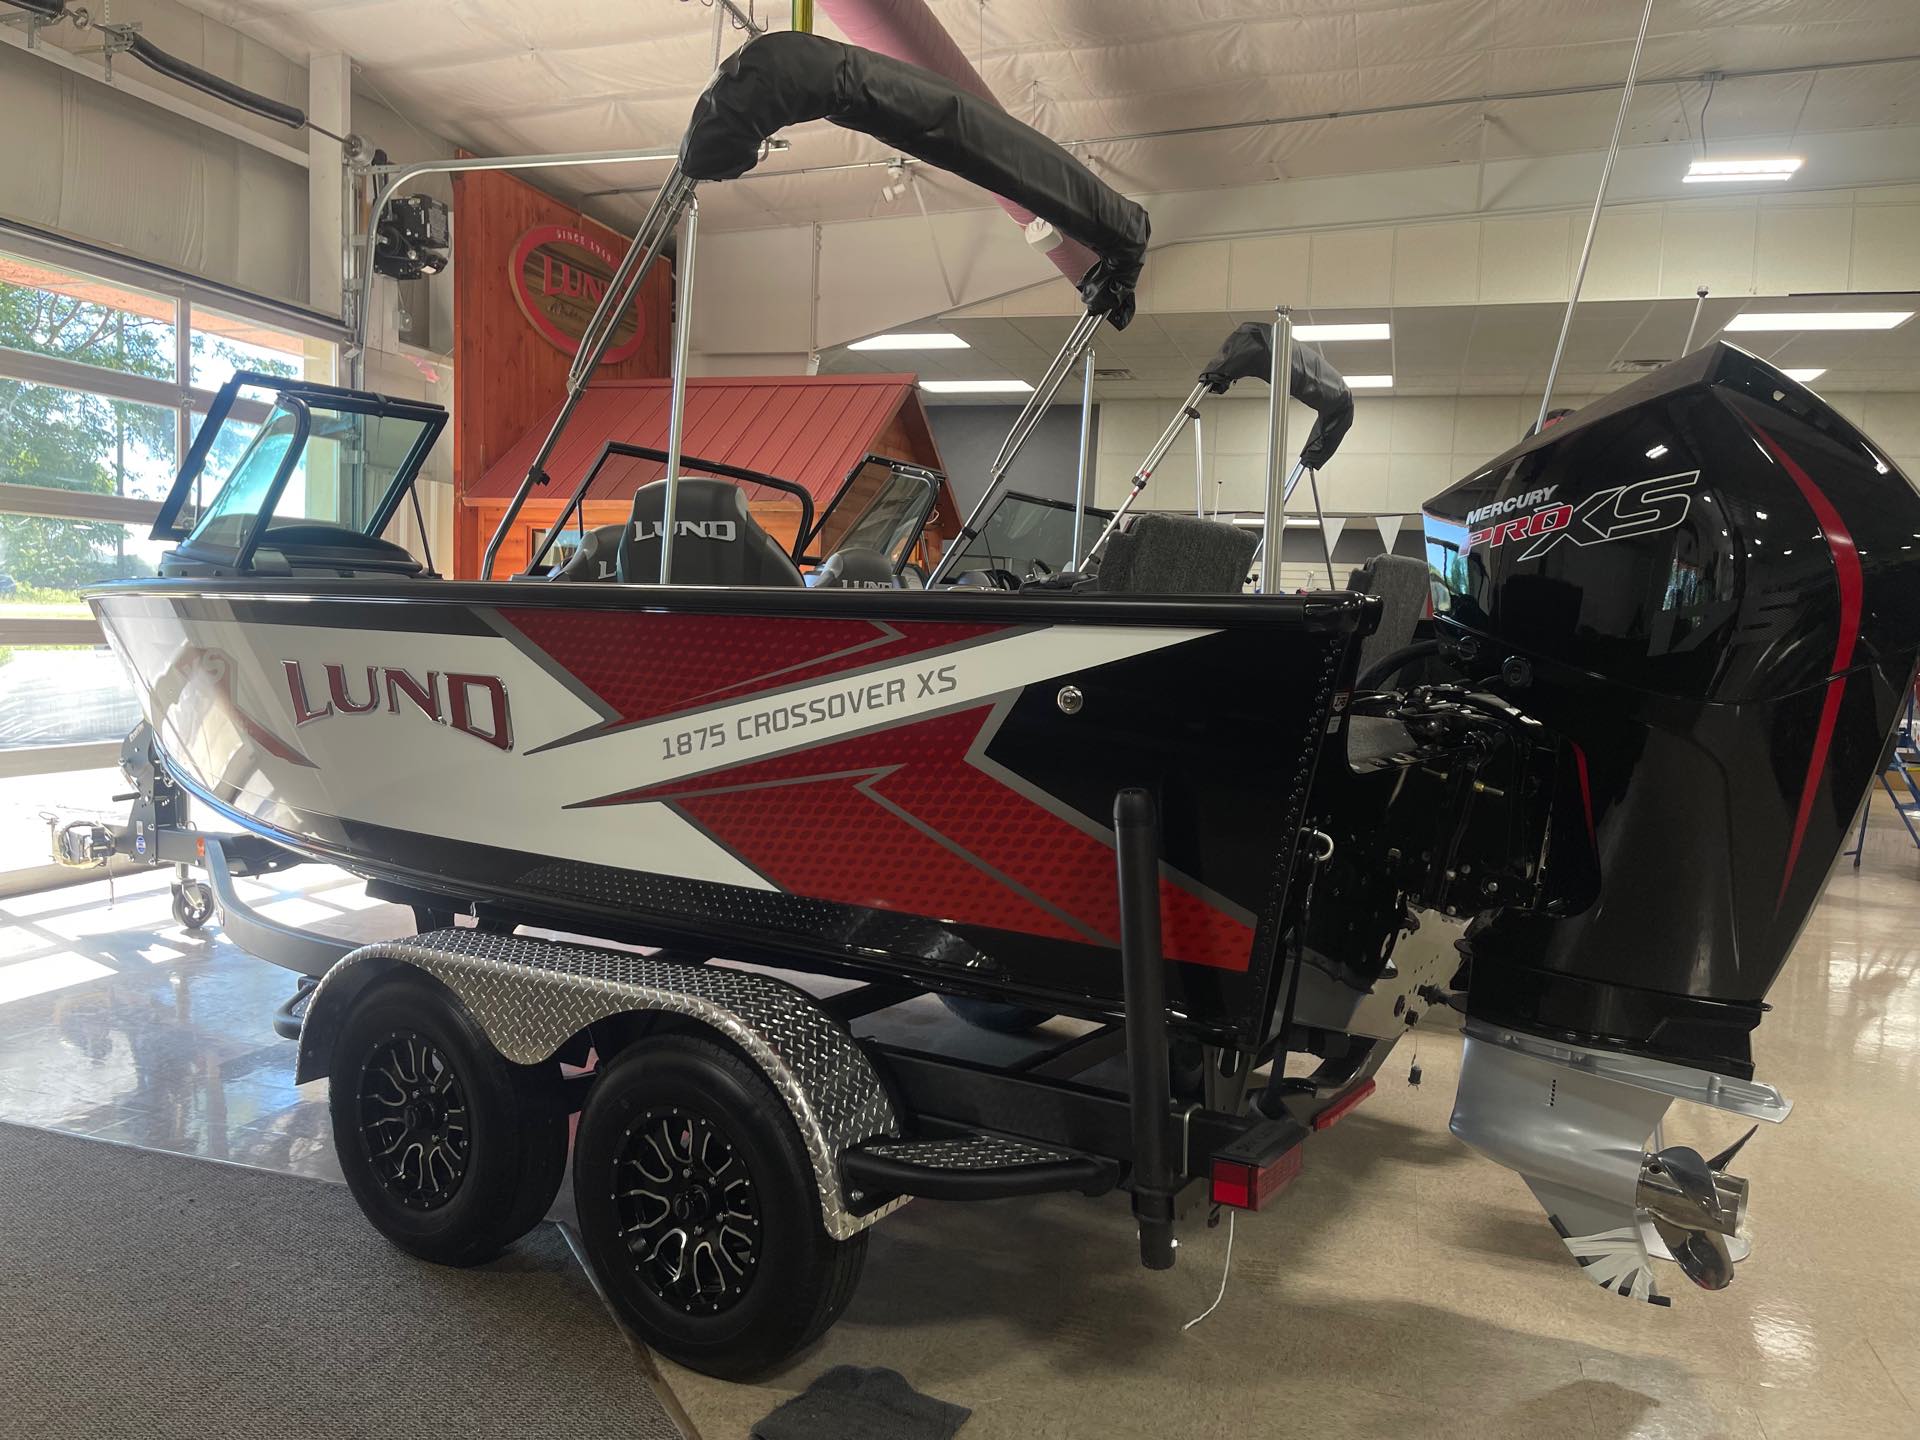 2022 Lund 1875 Crossover XS Sport at Pharo Marine, Waunakee, WI 53597